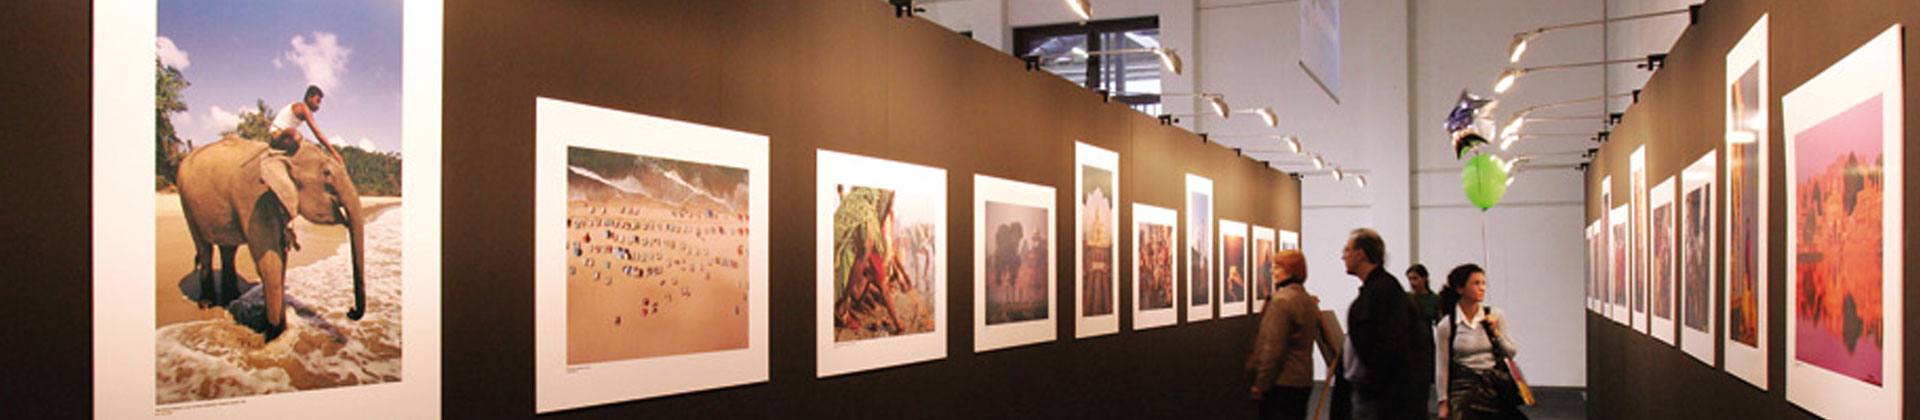 Art Exhibitions